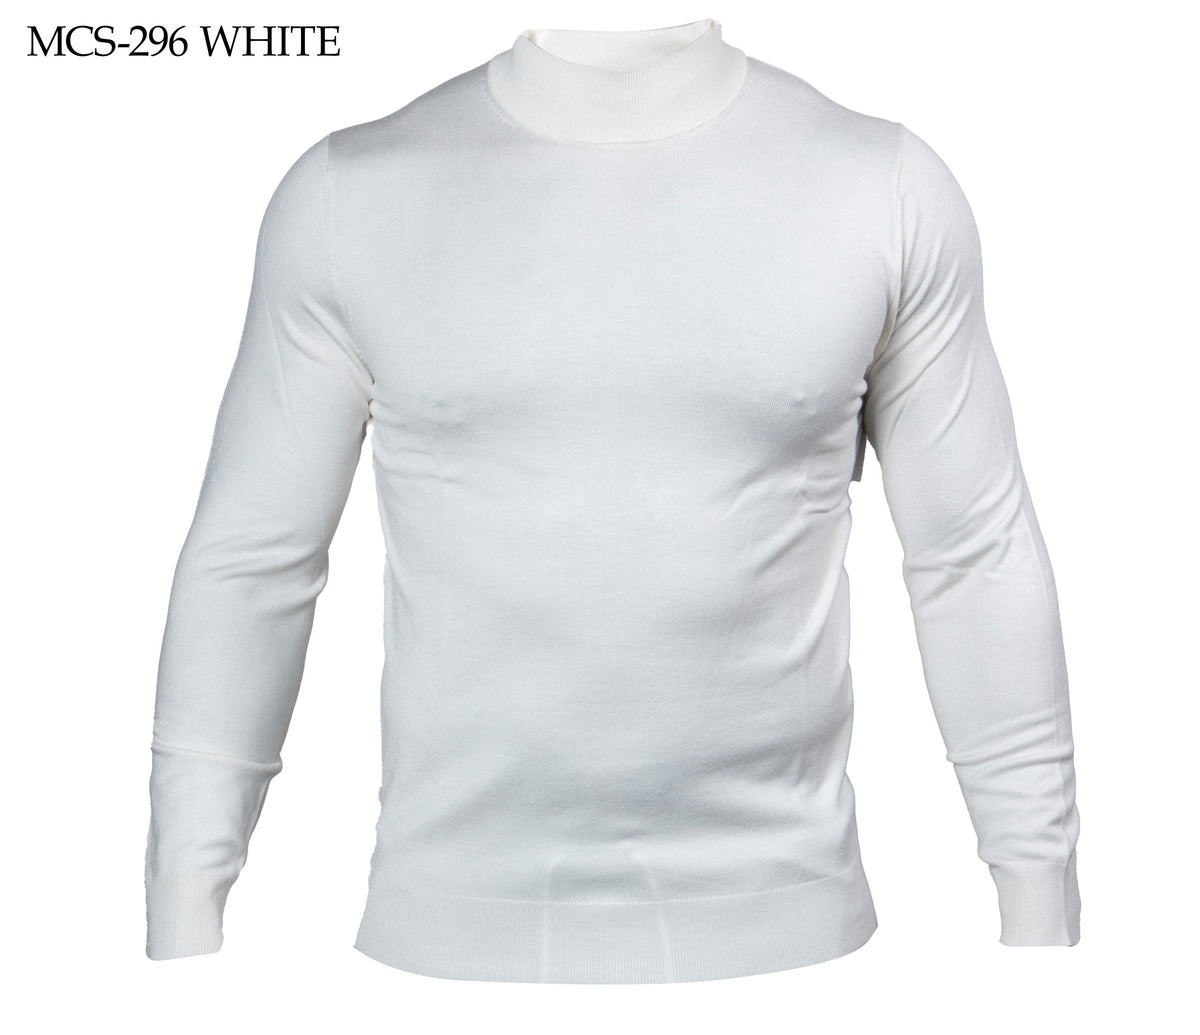 Prestige White Mock Neck Elite Sweater - Dudes Boutique